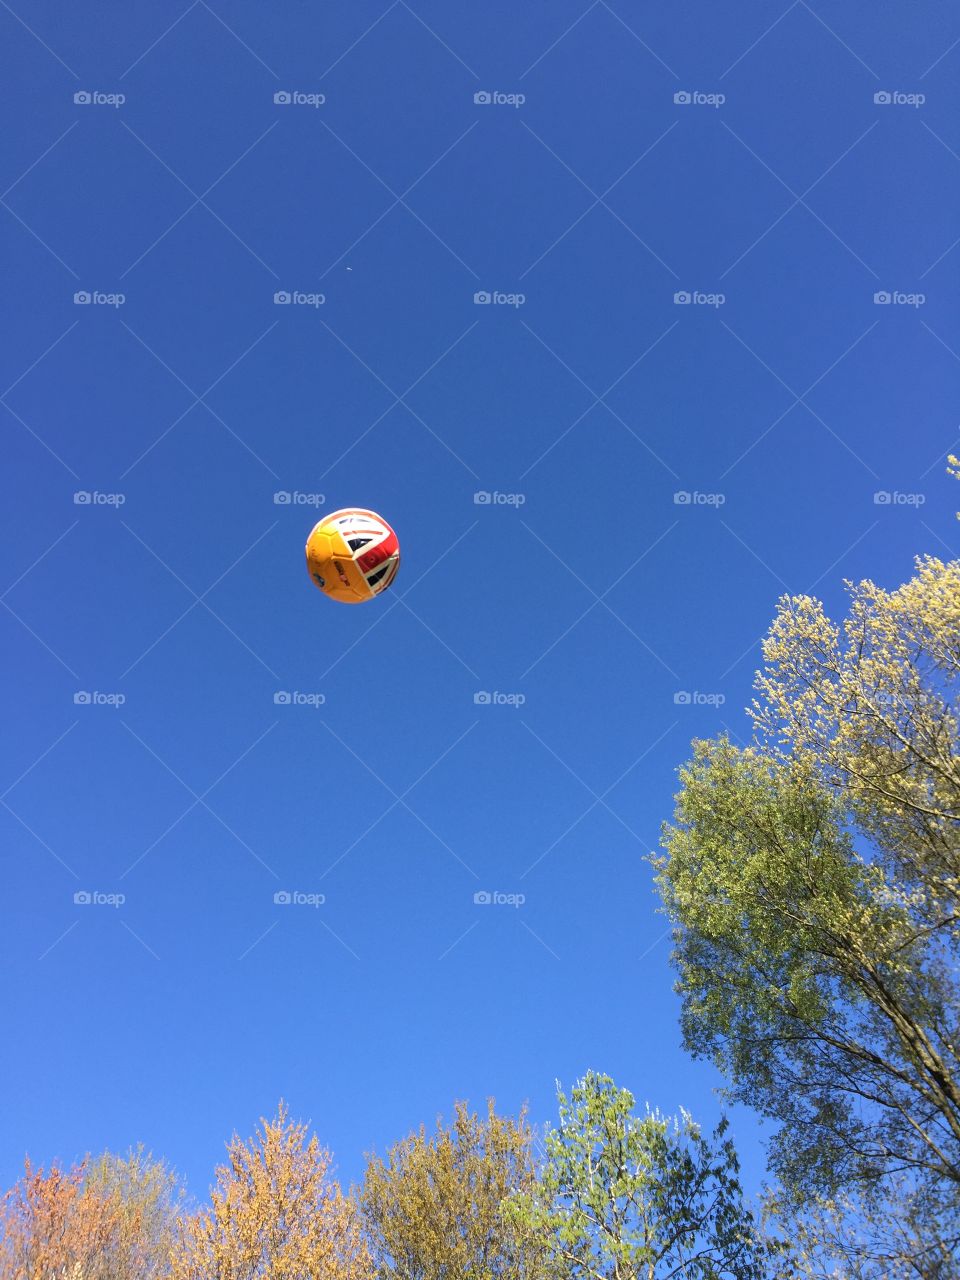 Soccer ball in the sky 